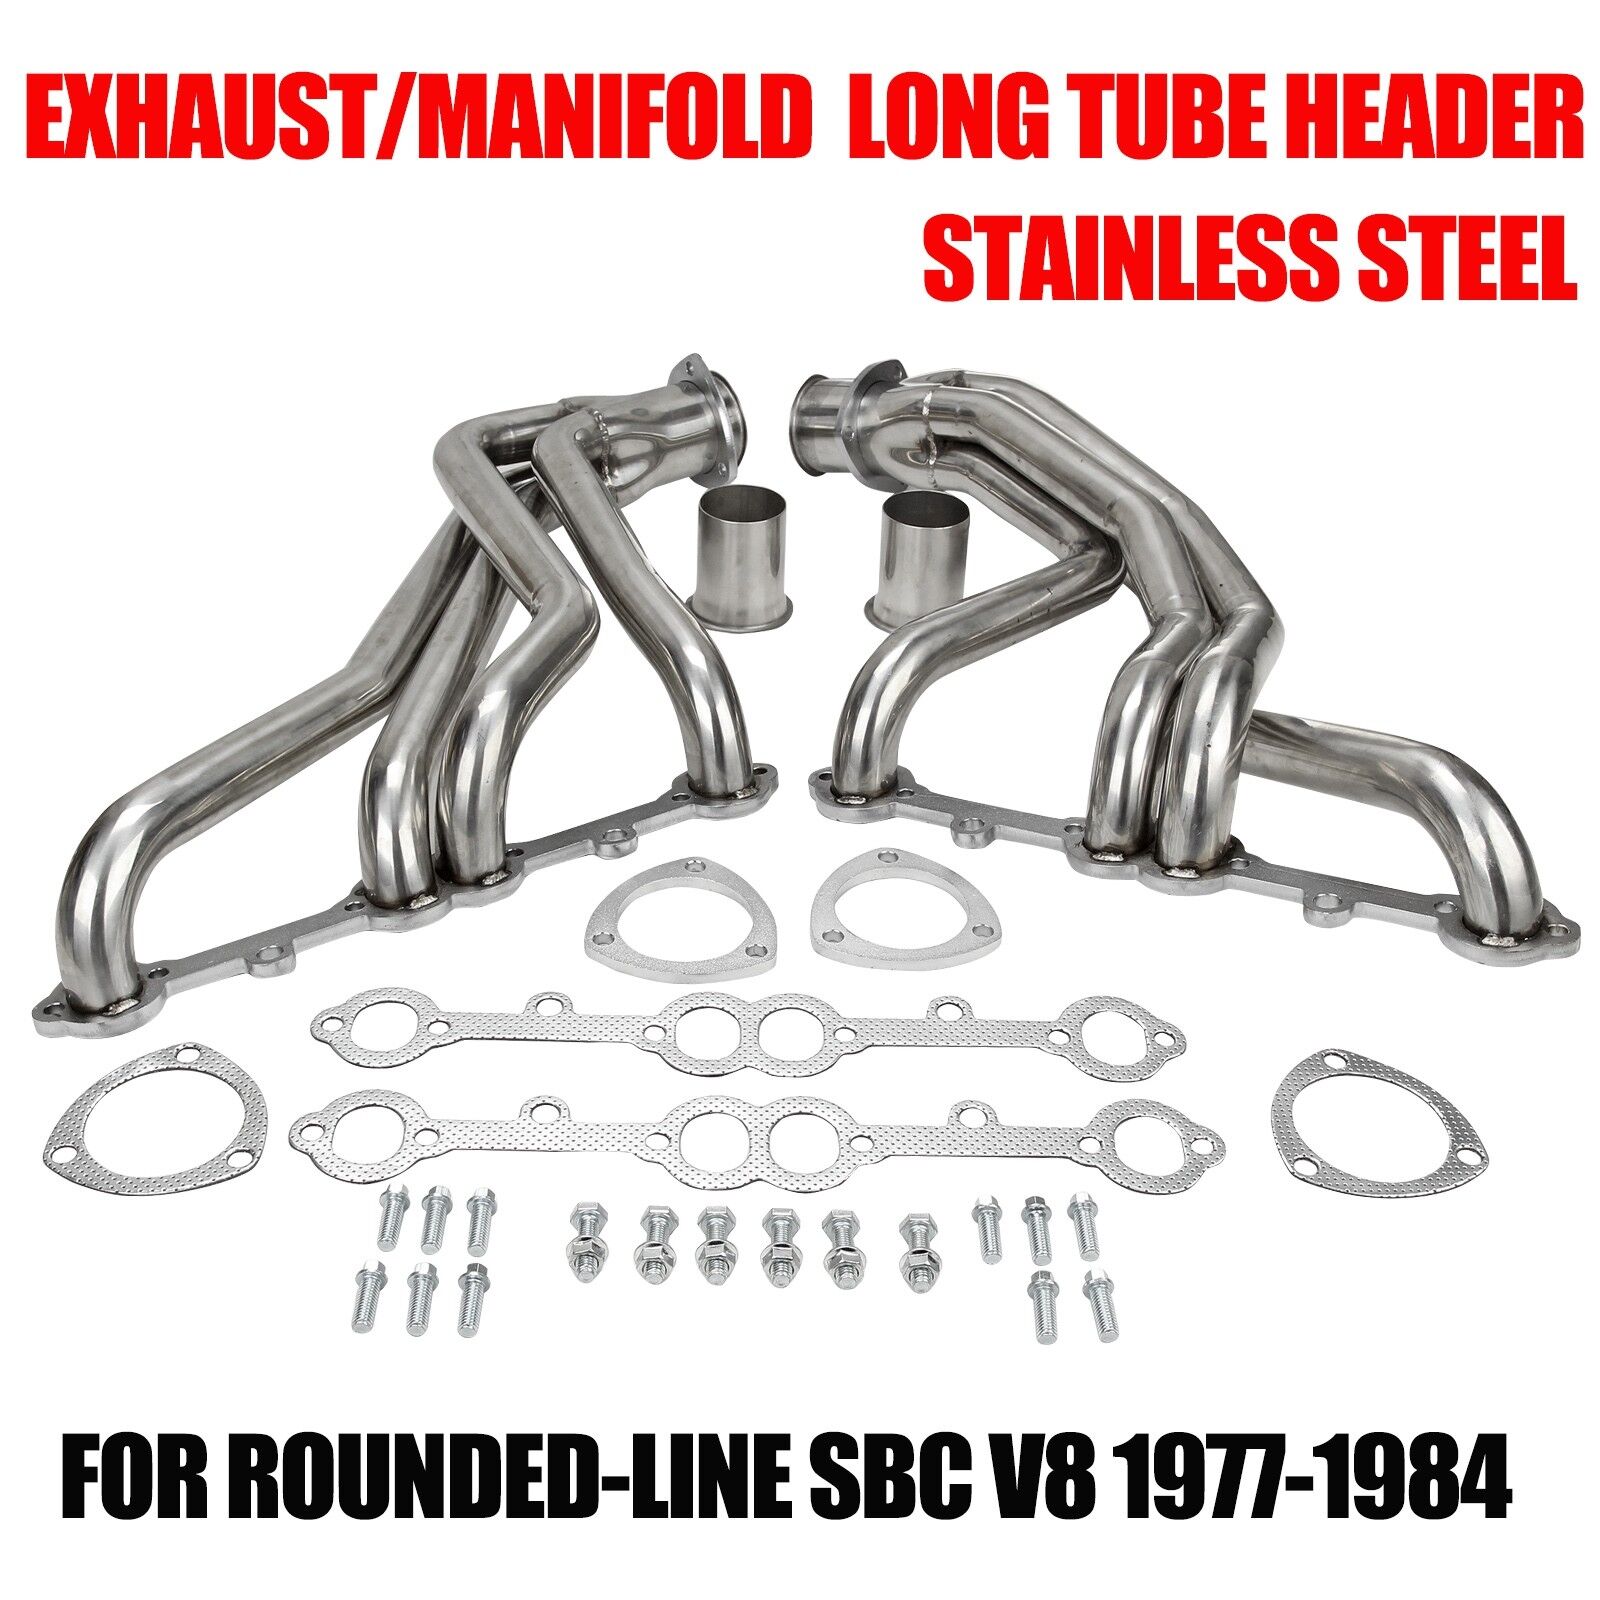 EXHAUST/MANIFOLD STAINLESS STEEL LONG TUBE HEADER FOR ROUNDED-LINE SBC V8 77-84